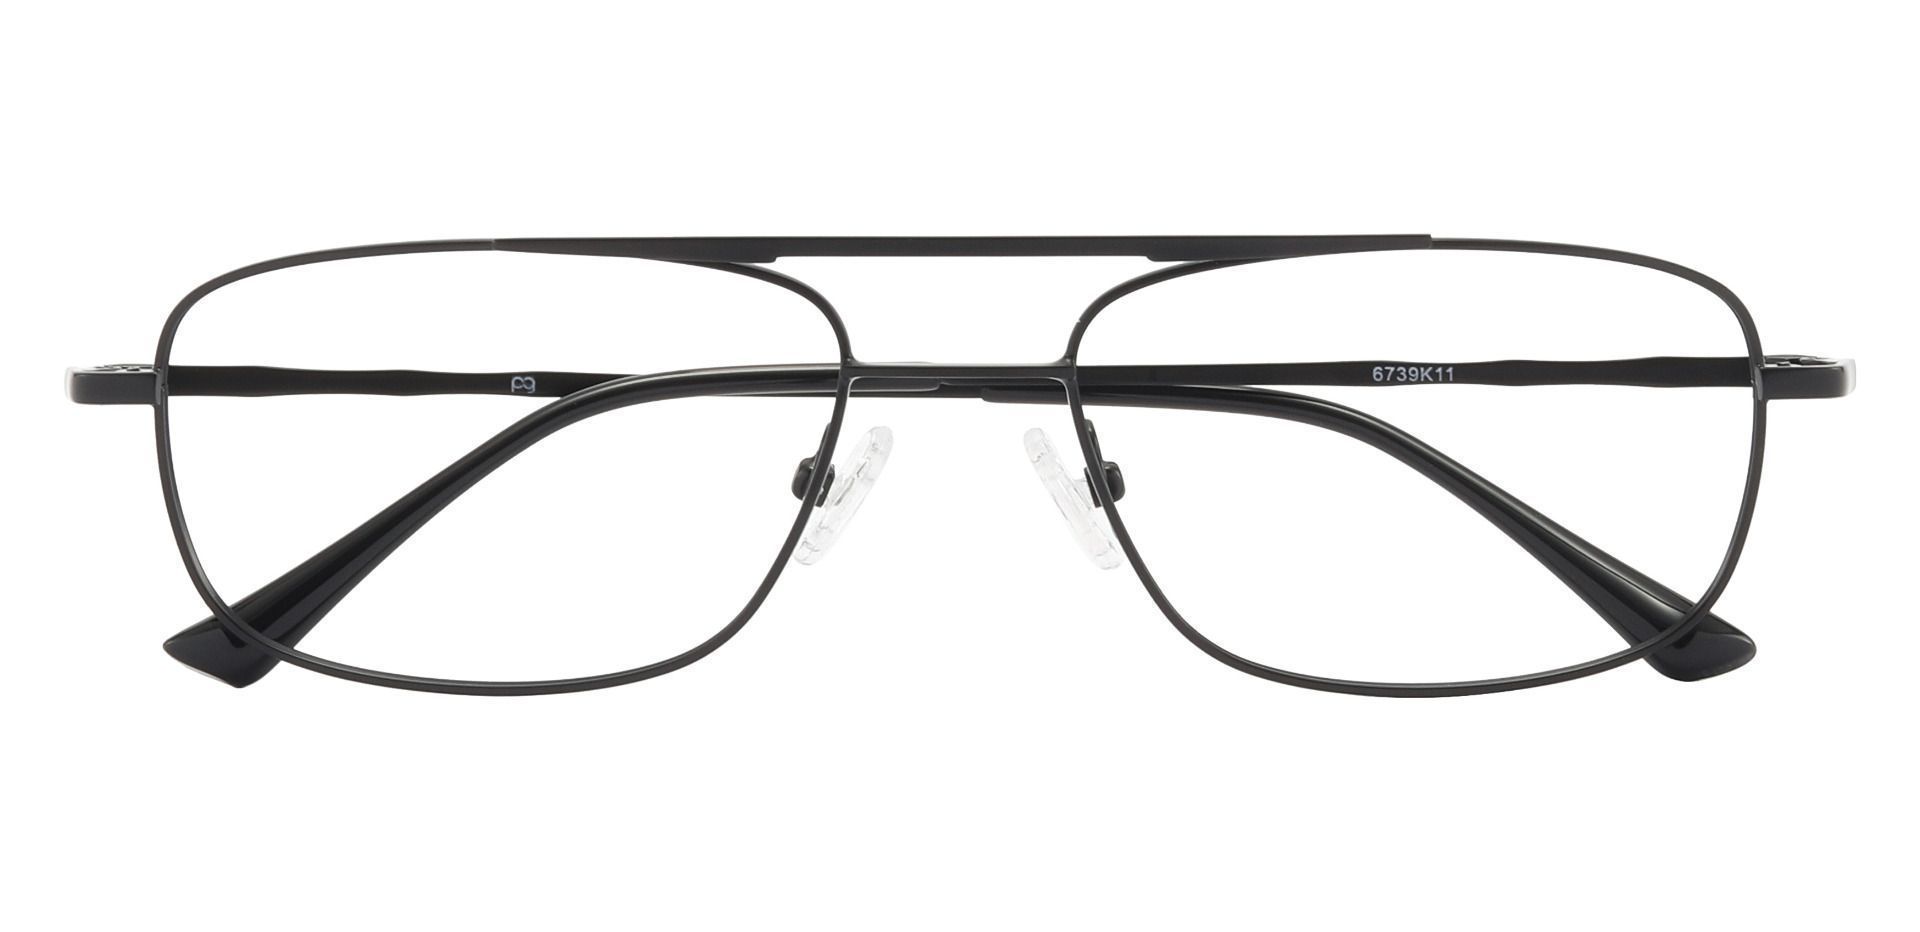 Hugo Aviator Prescription Glasses - Black